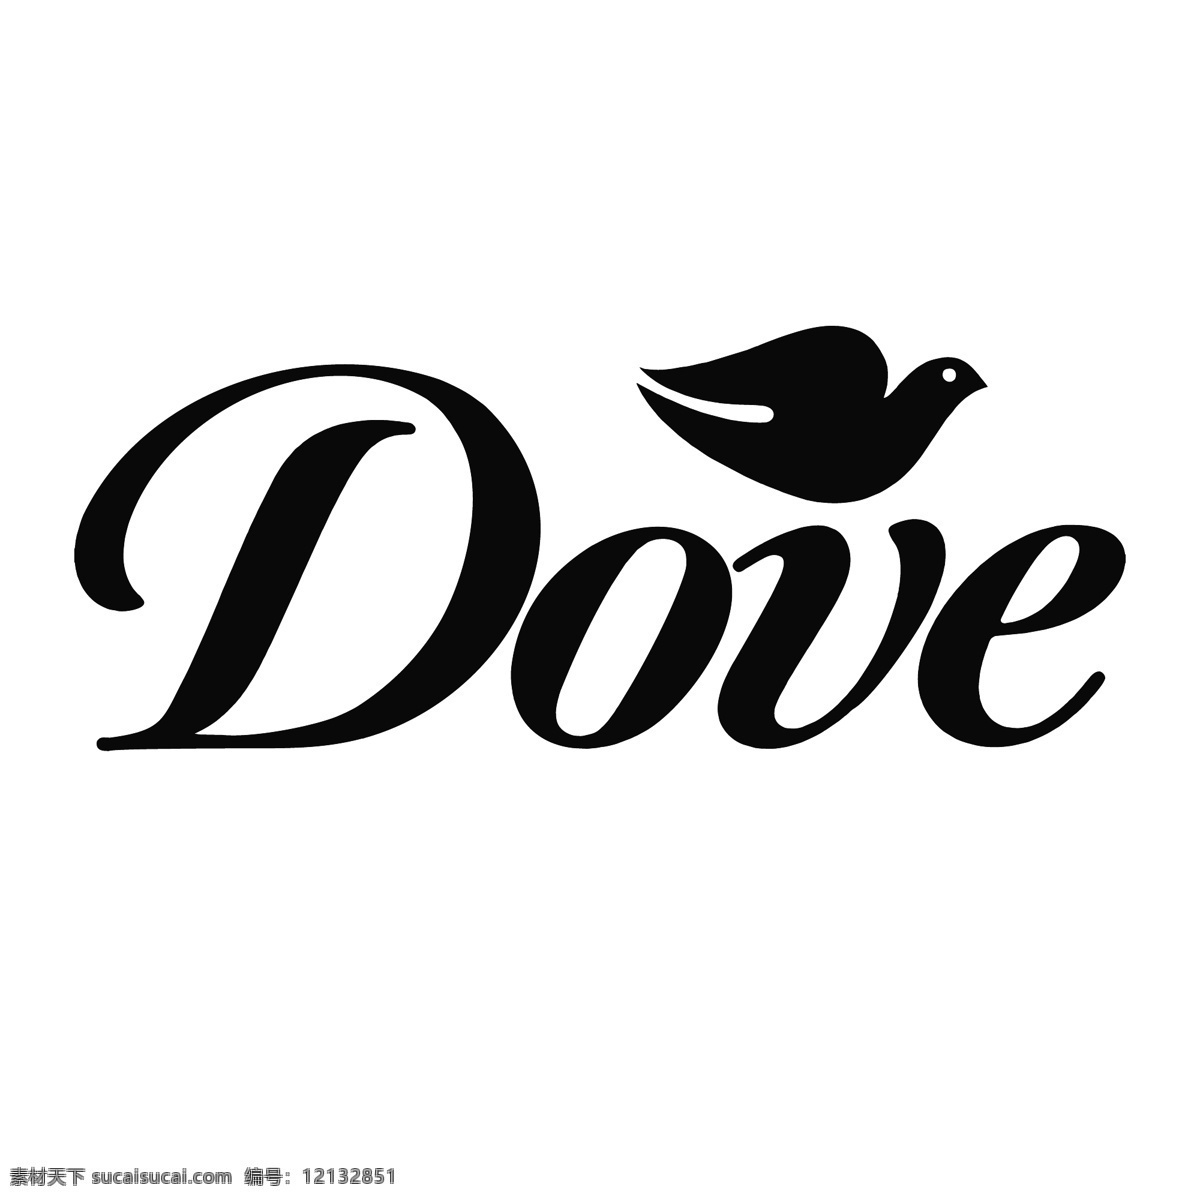 多芬 logo 多芬logo dove dovelogo 标志图标 公共标识标志